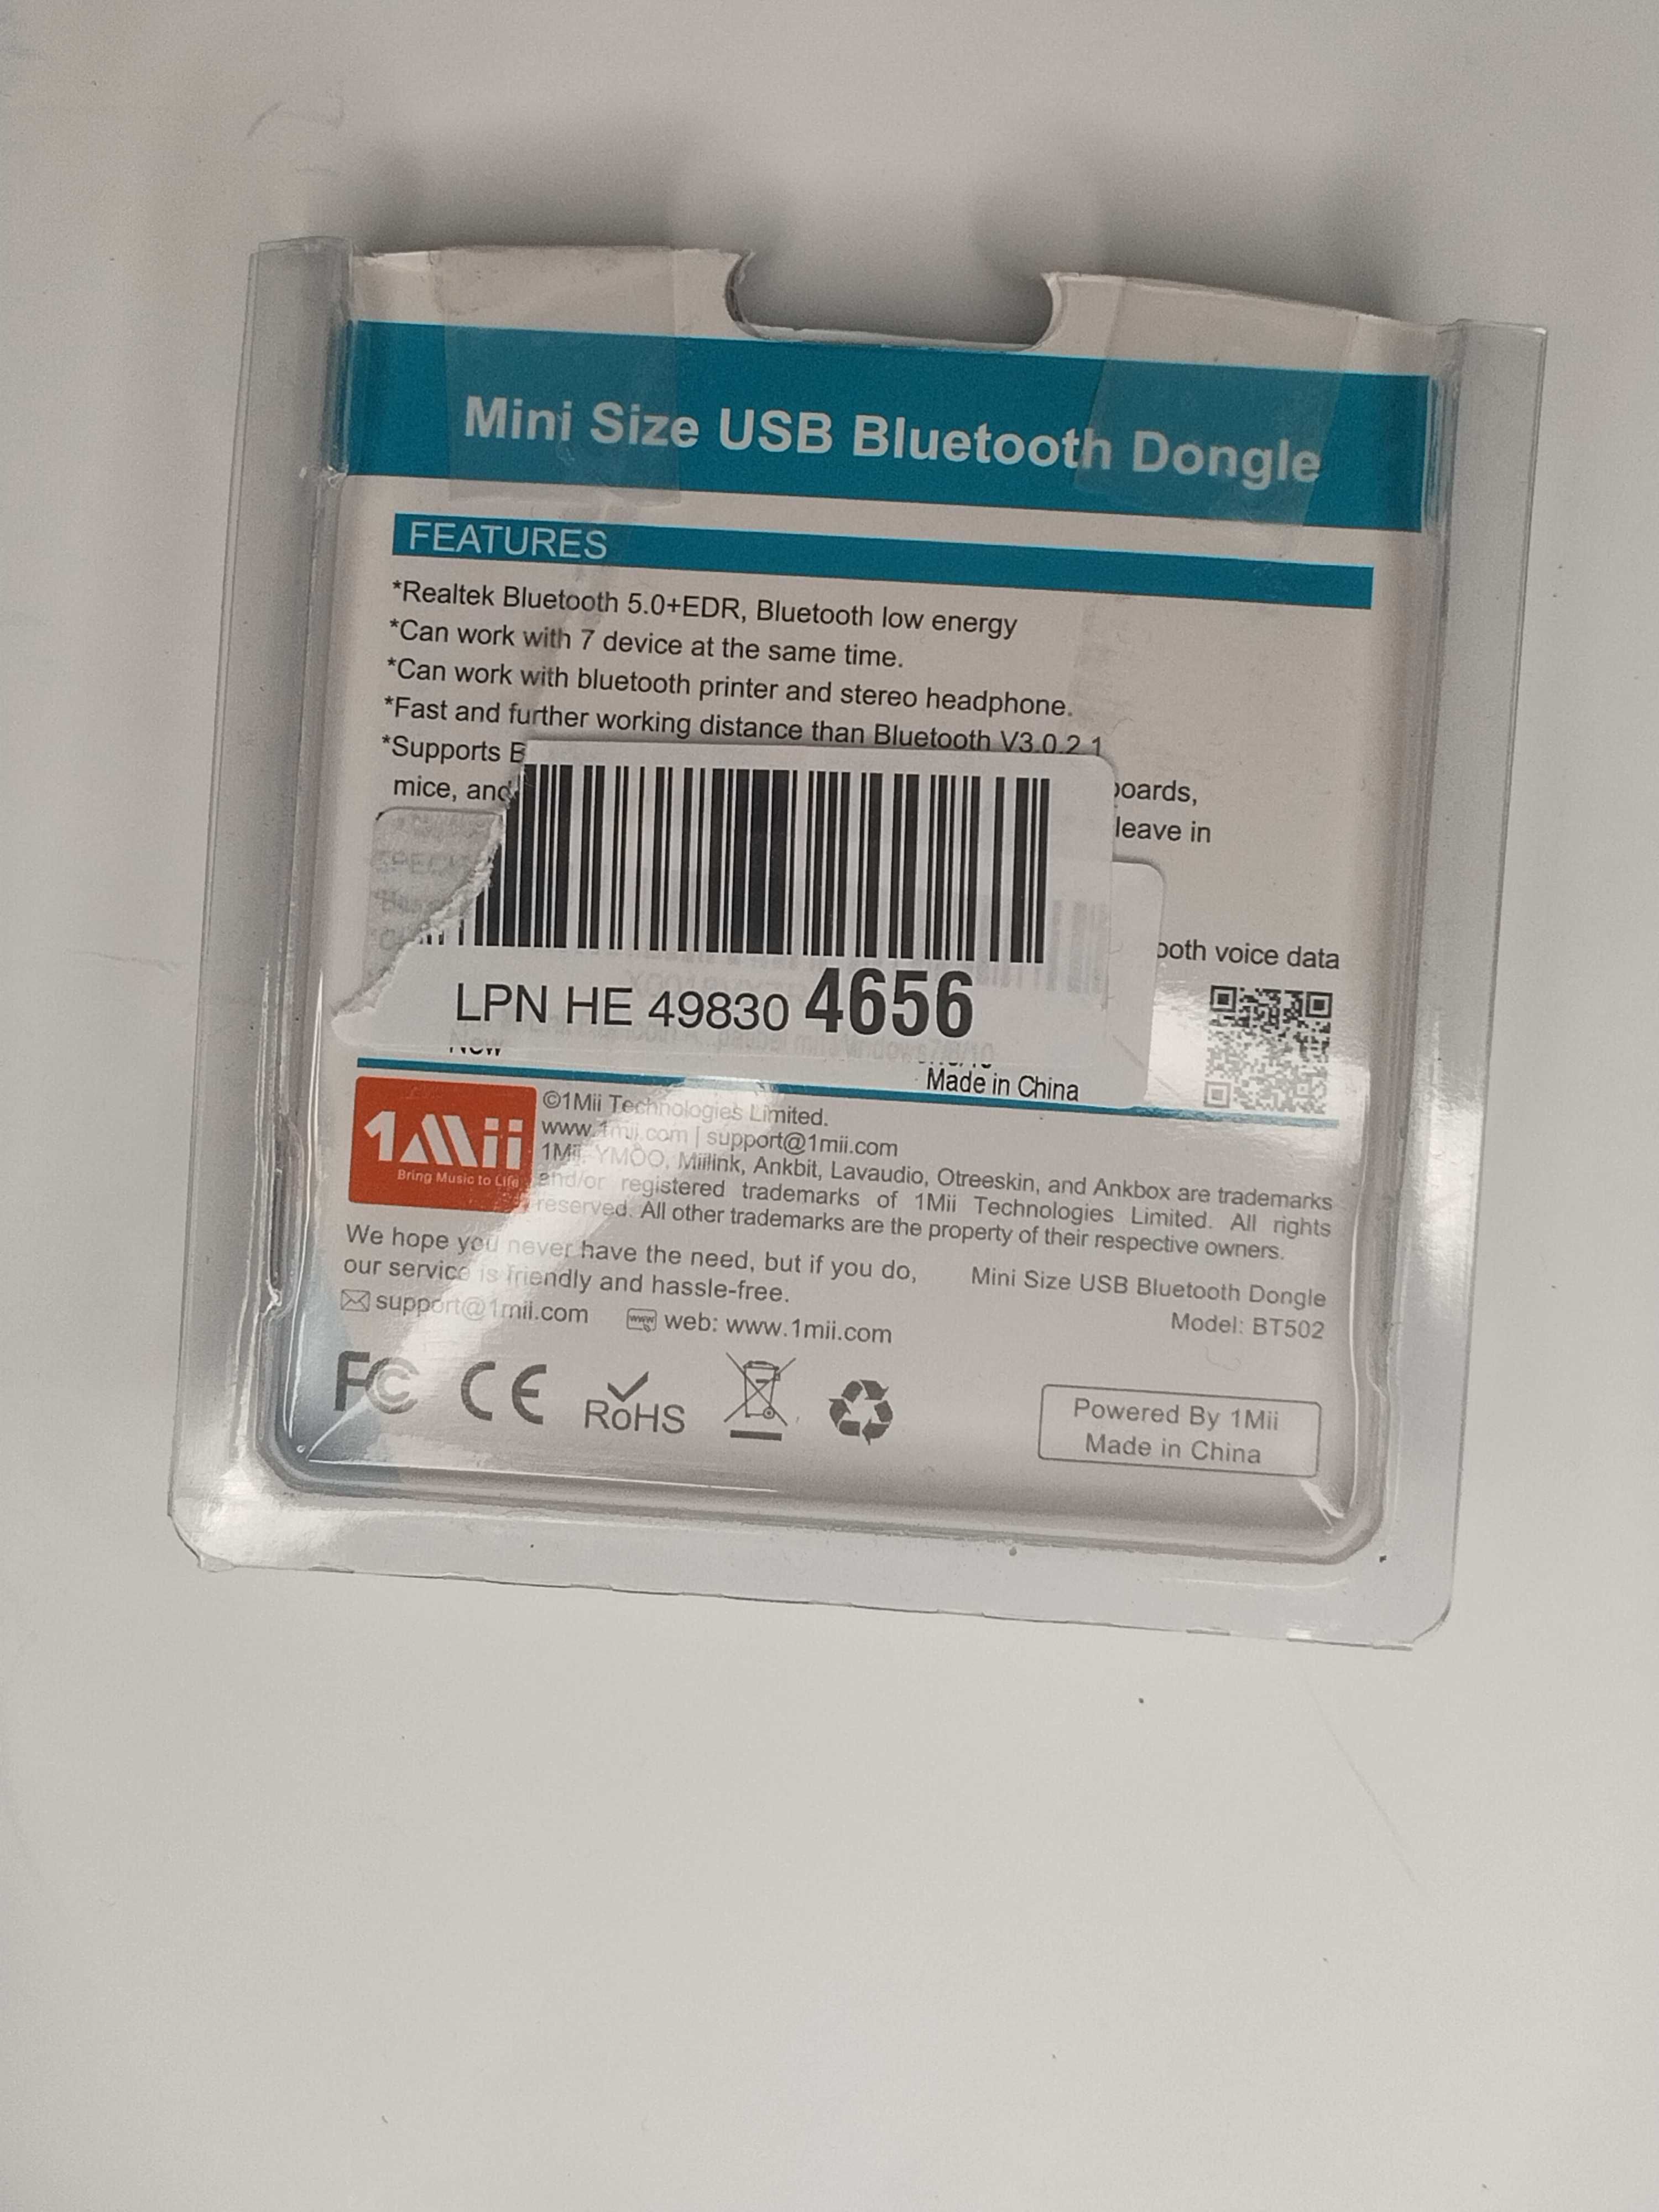 1Mii Miilink BT502 Bluetooth Adapter USB Dongle